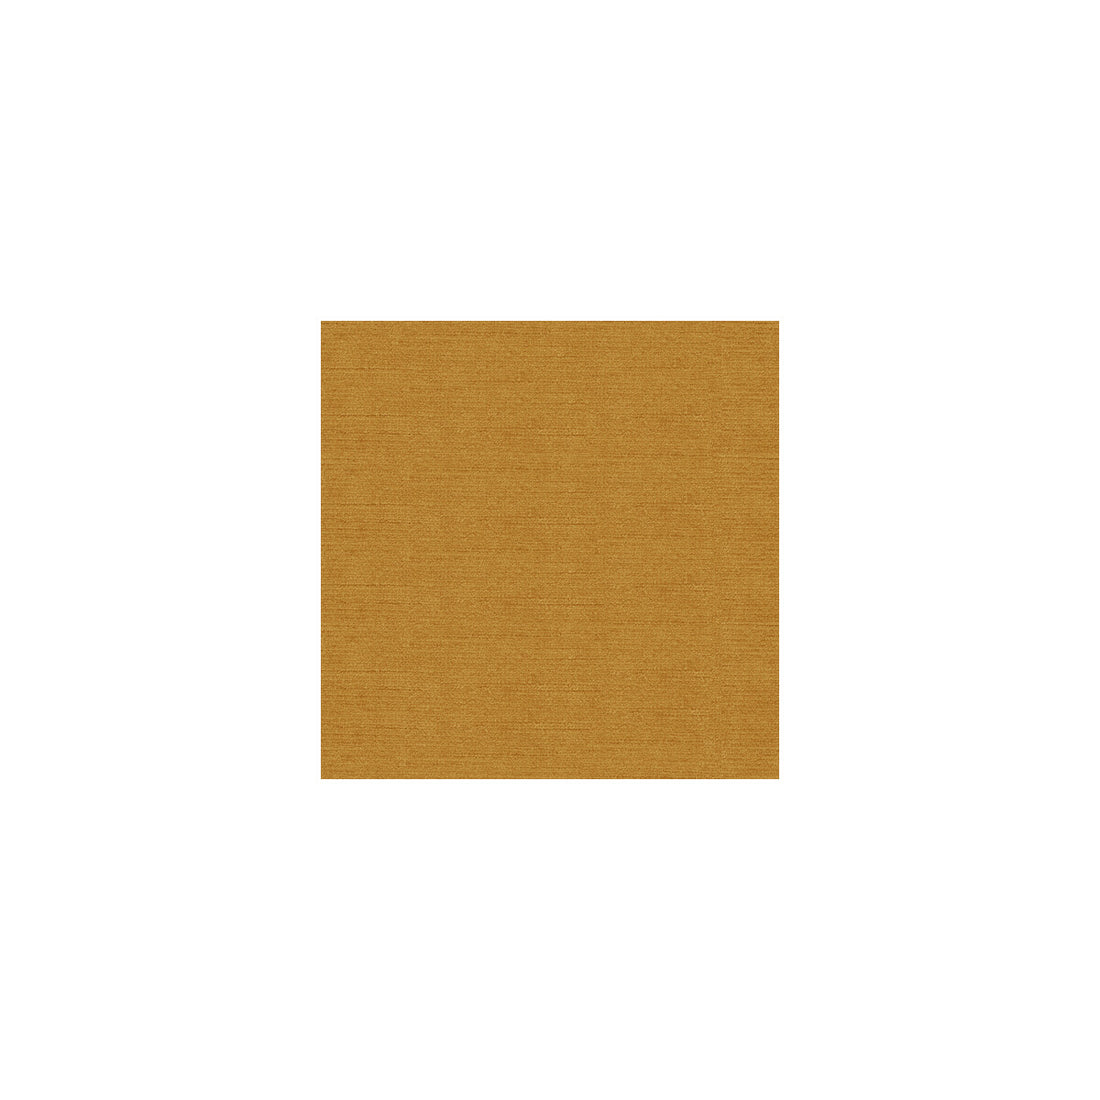 Venetian fabric in amber color - pattern 31326.44.0 - by Kravet Design